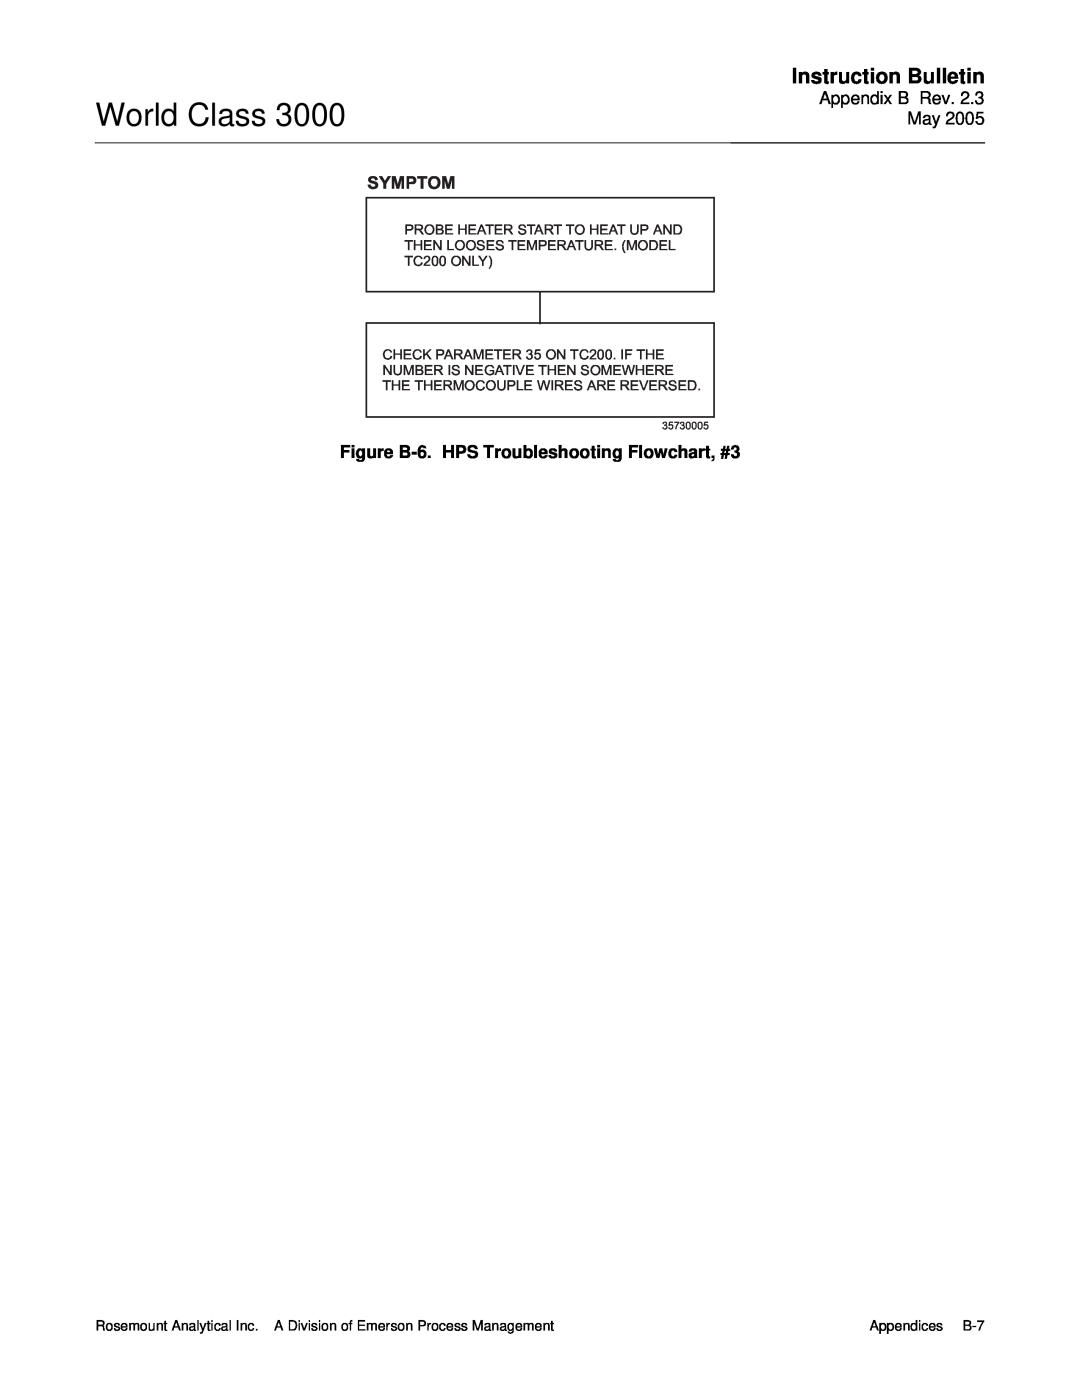 Emerson 3000 World Class, Instruction Bulletin, Symptom, Figure B-6.HPS Troubleshooting Flowchart, #3, Appendices B-7 